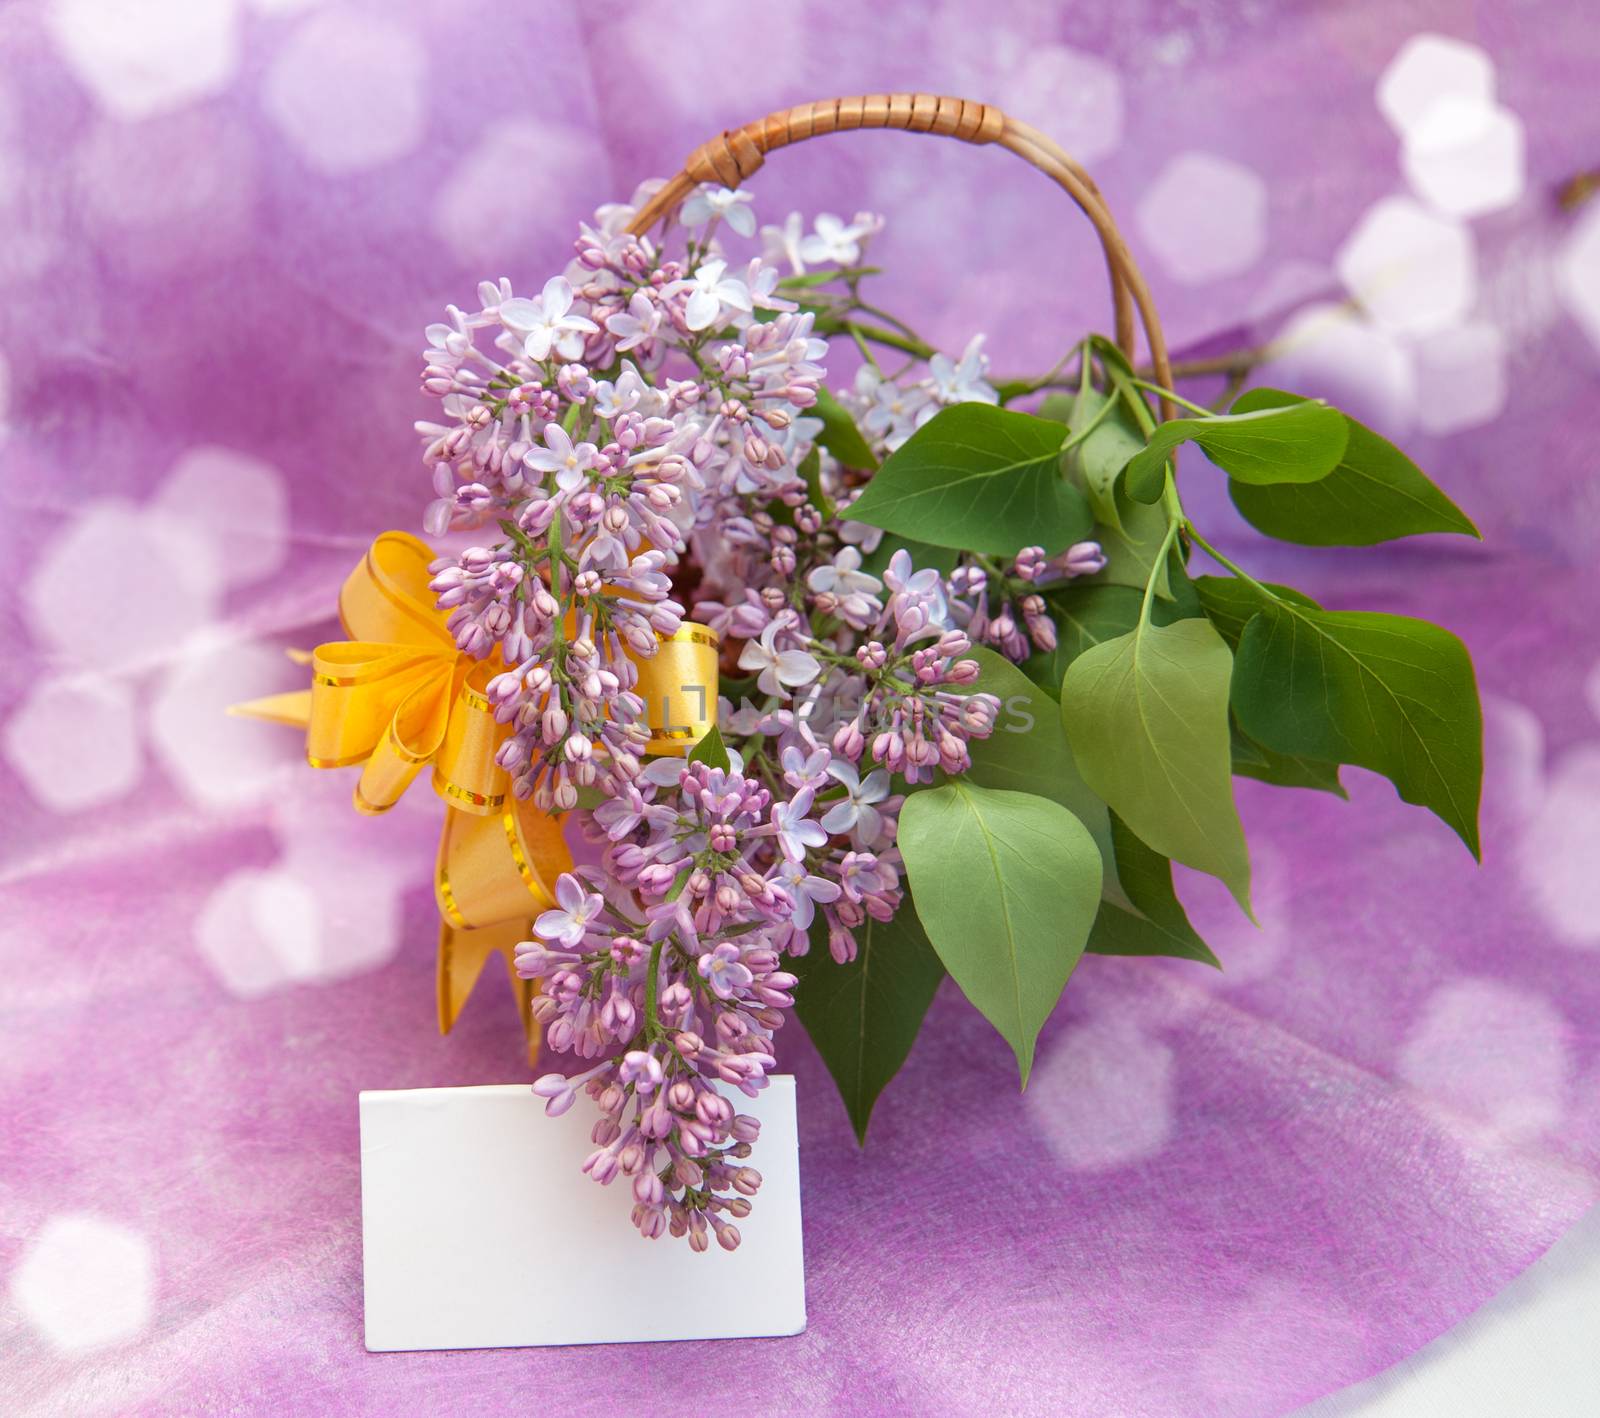 Lilacs in a basket by raduga21